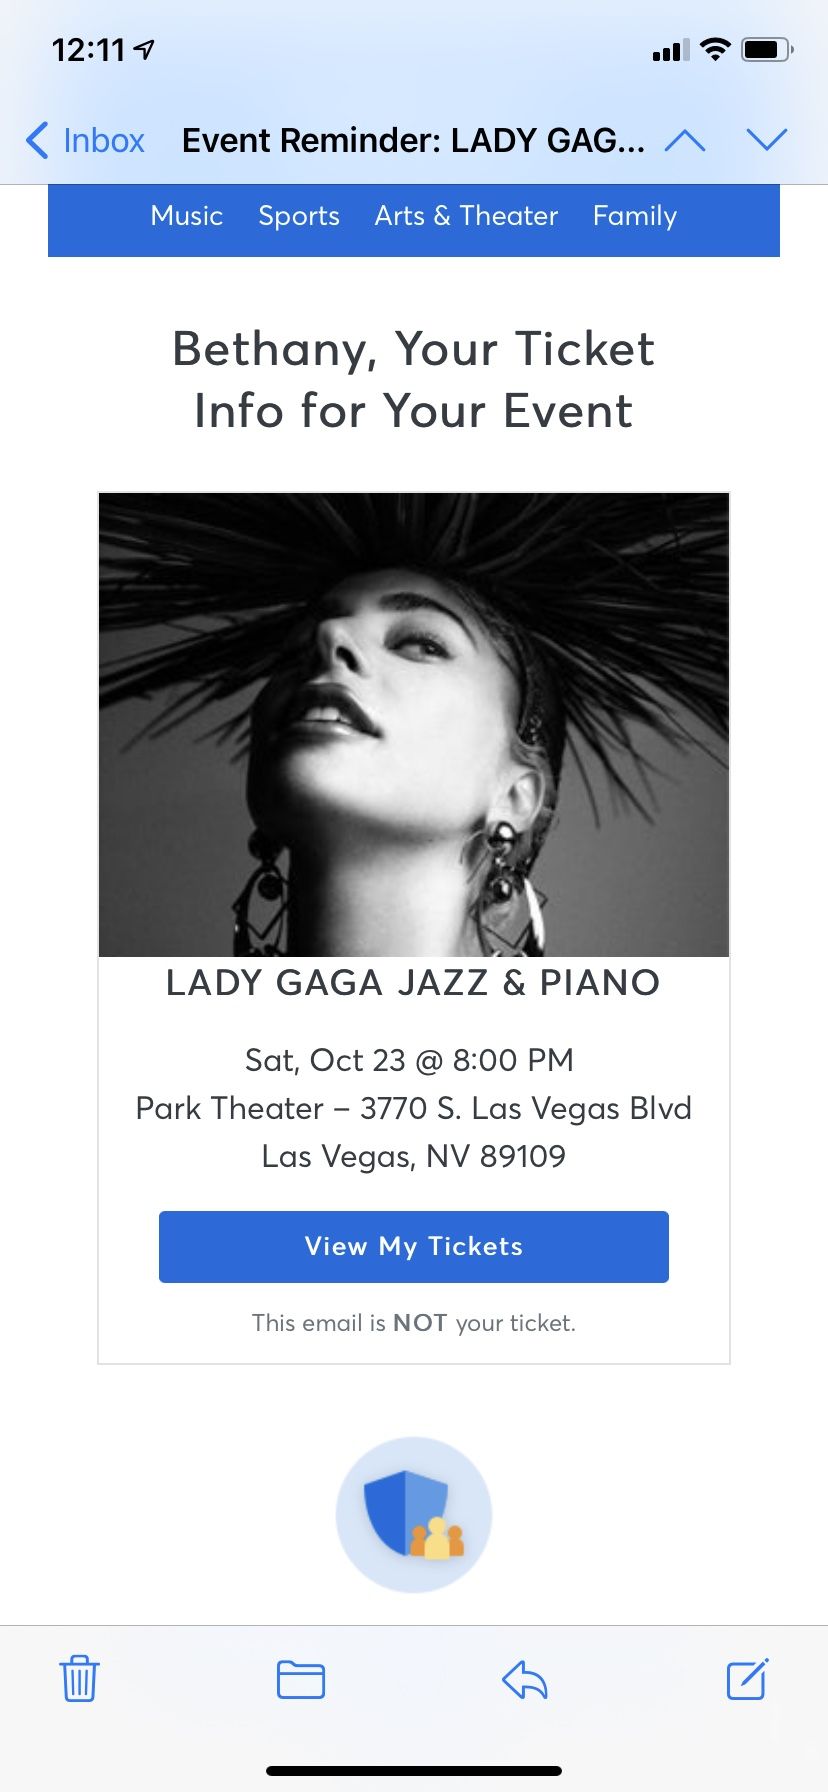 Lady Gaga Jazz & Piano Vegas Oct 23